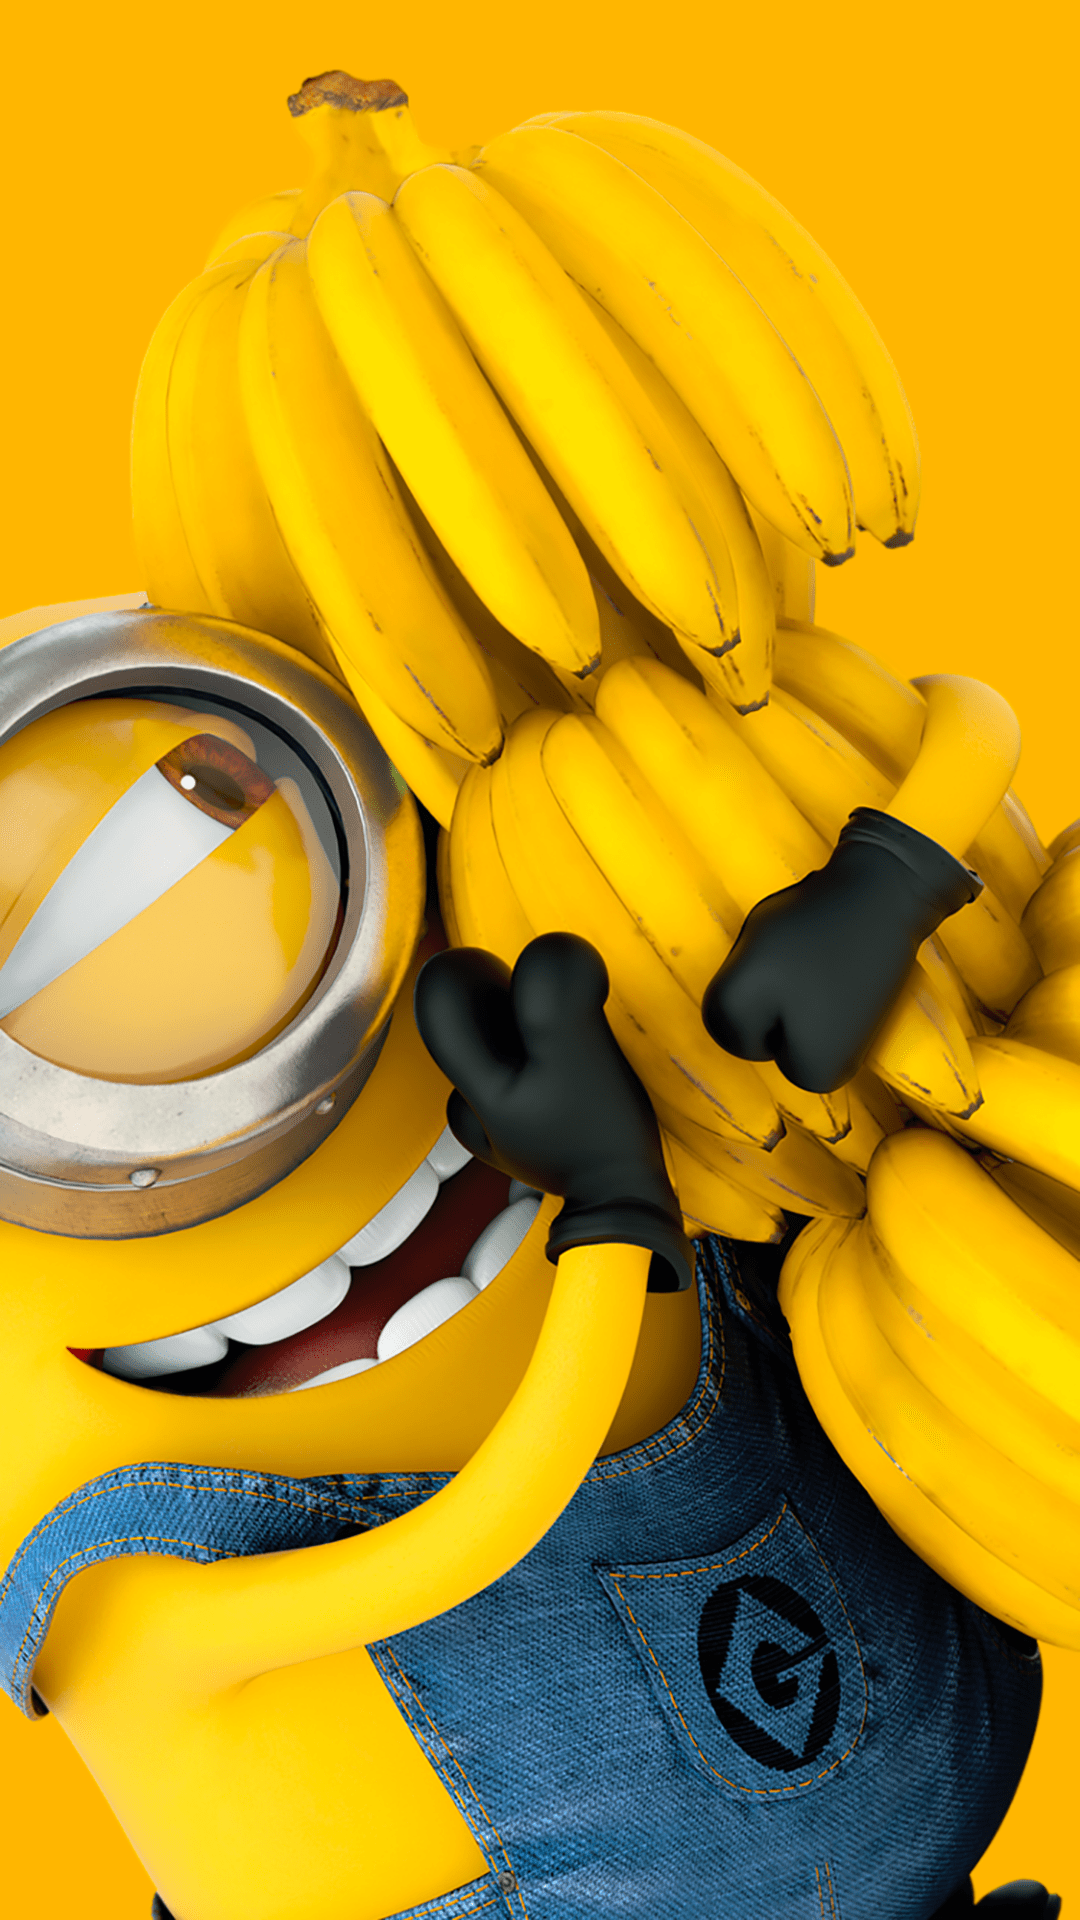 Minions Banana Wallpapers - Top Free Minions Banana Backgrounds